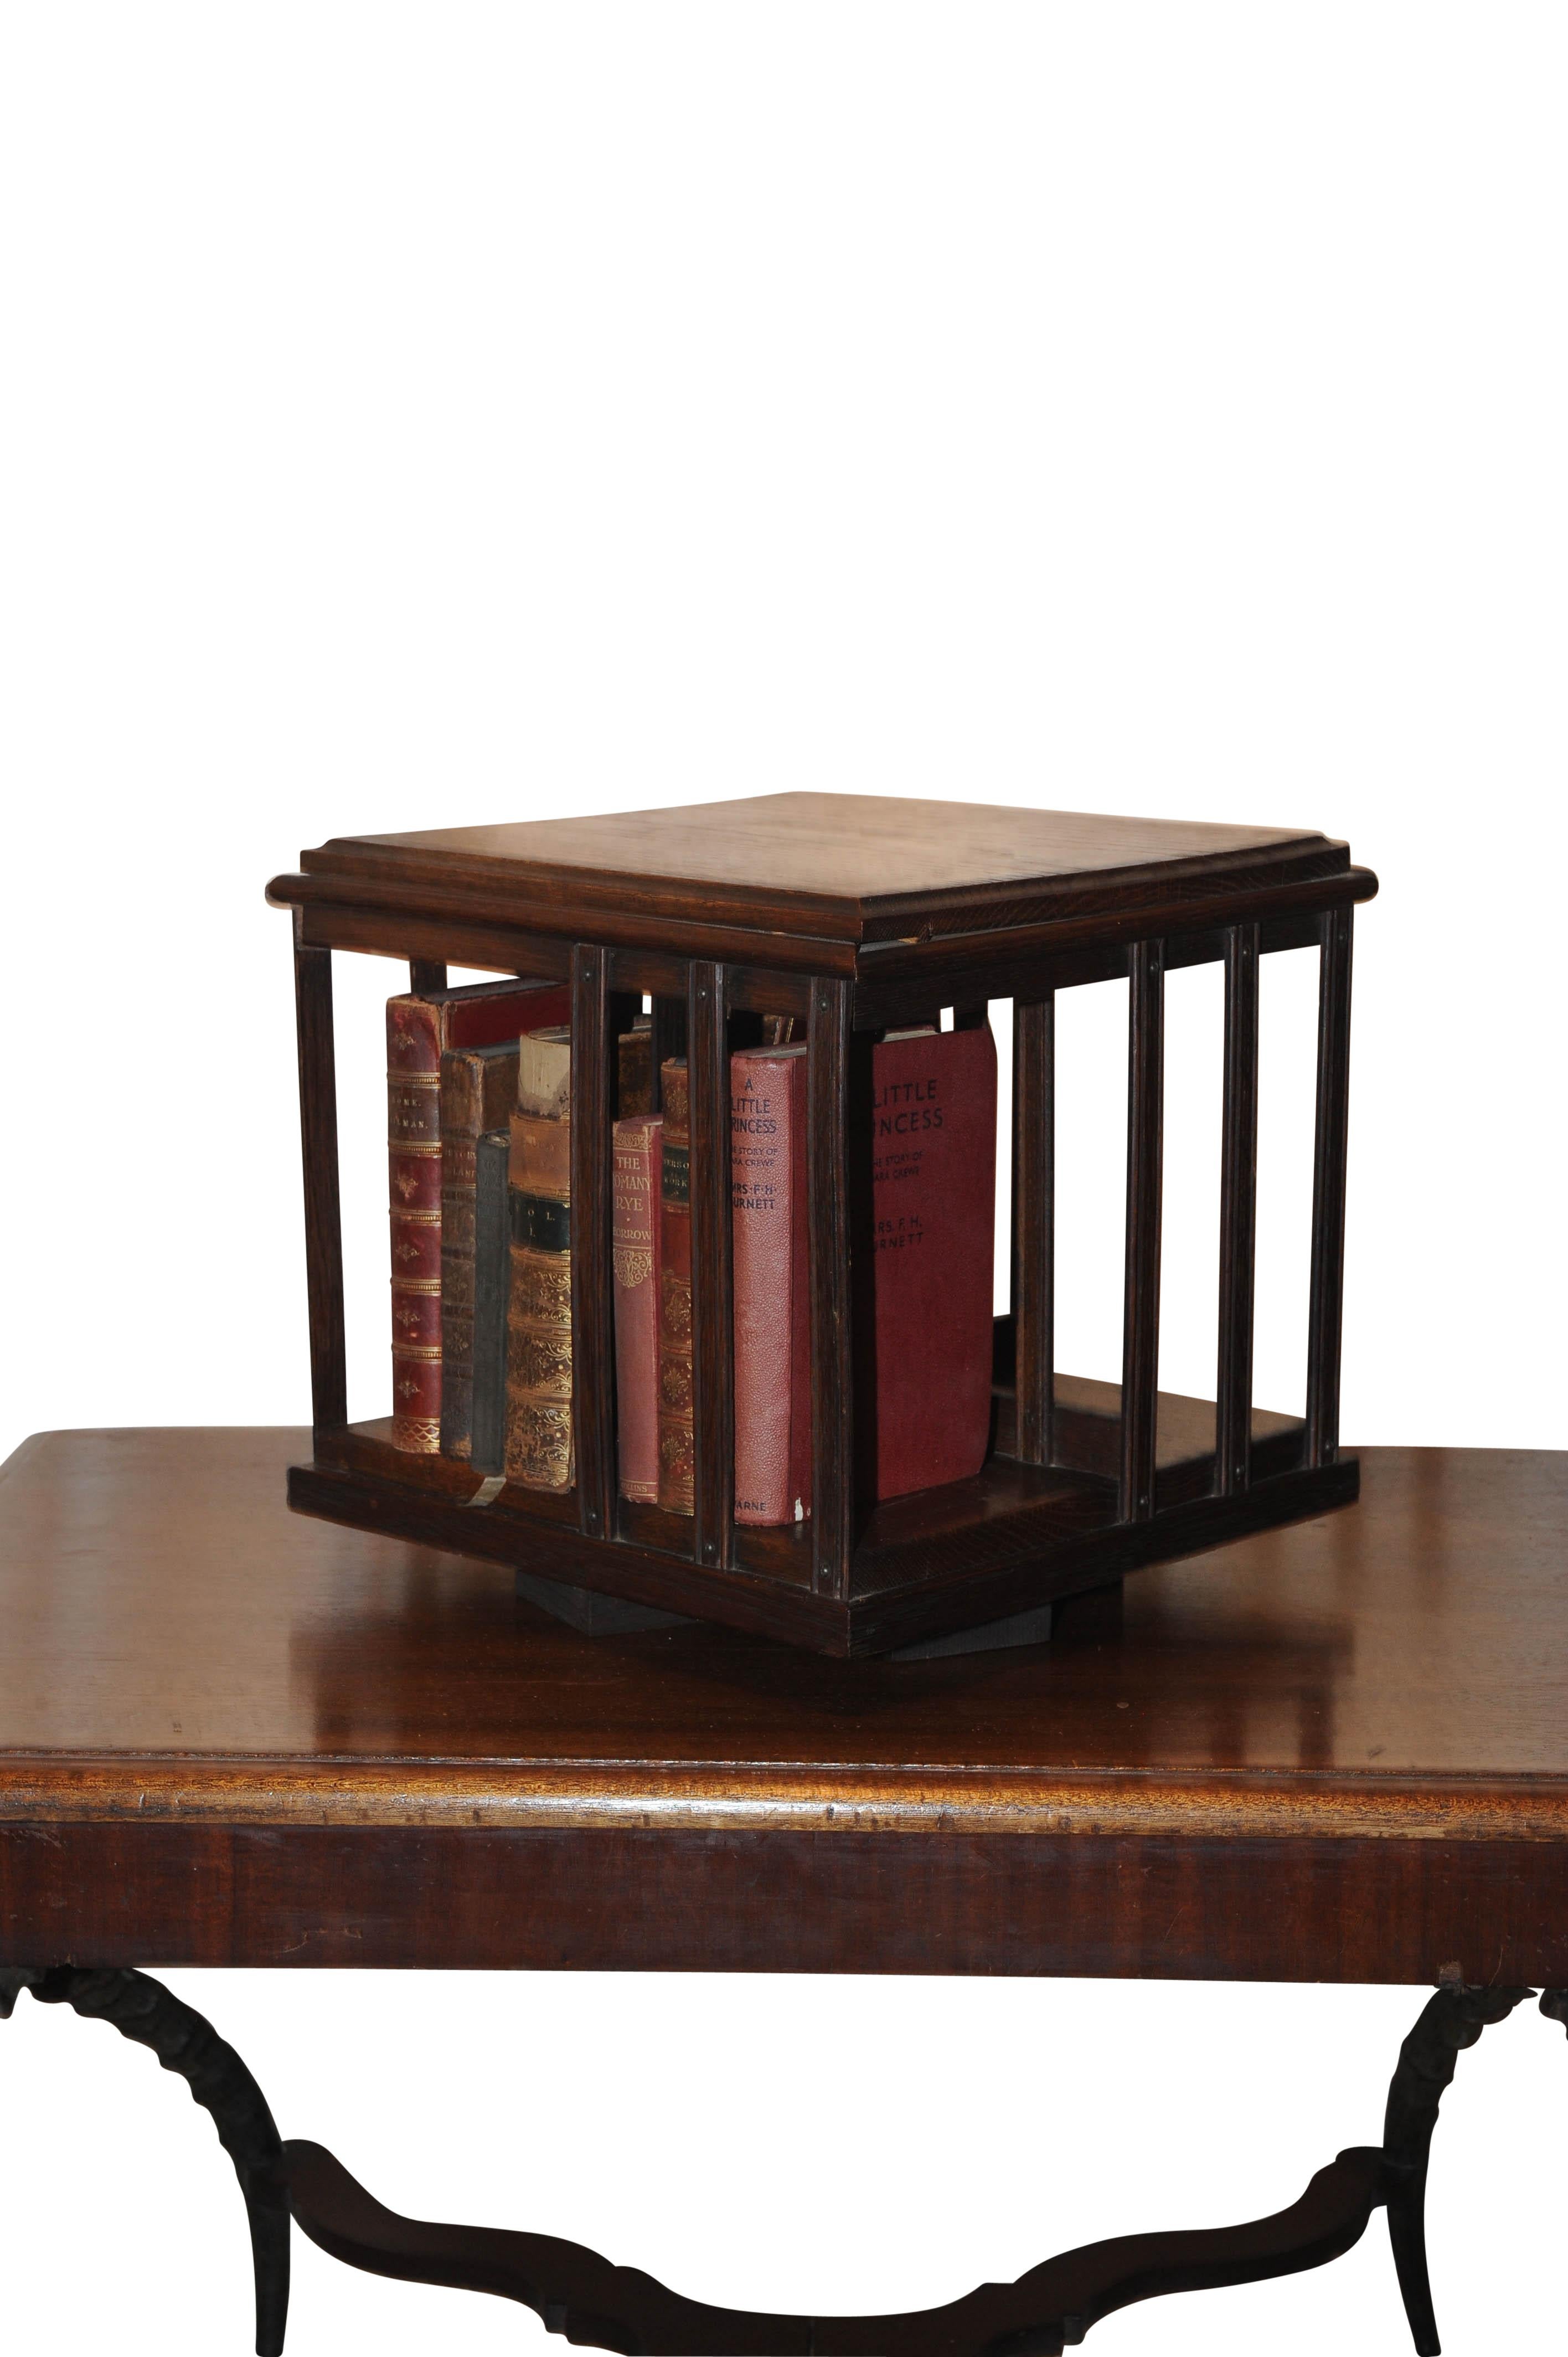 Victorian mahogany revolving tabletop / desktop bookcase.
               